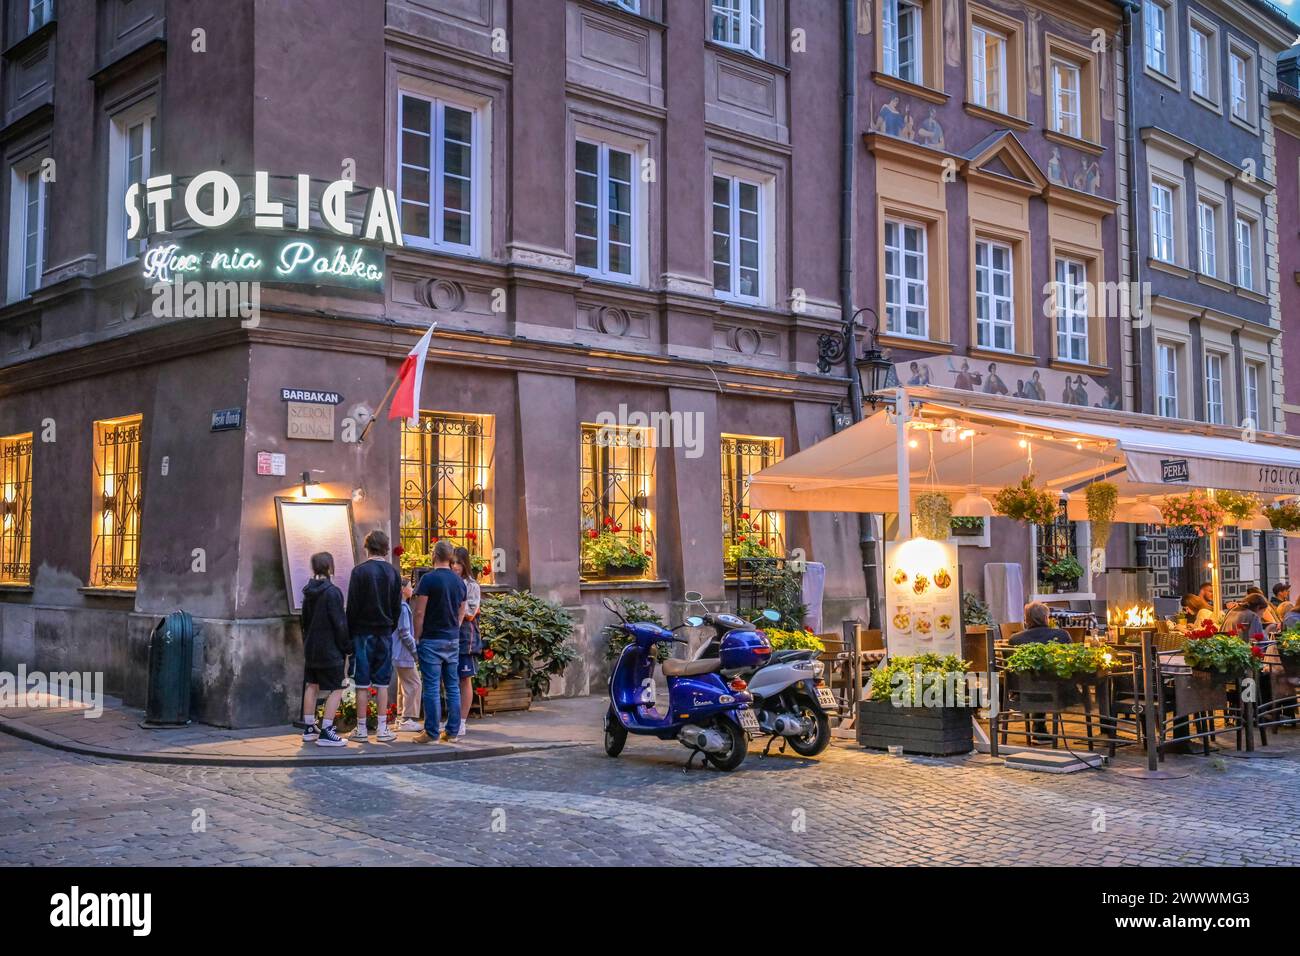 Restaurant Stolica, Szeroki Dunaj, Altstadt Stare Miasto, Warschau, Woiwodschaft Masowien, Polen Stock Photo